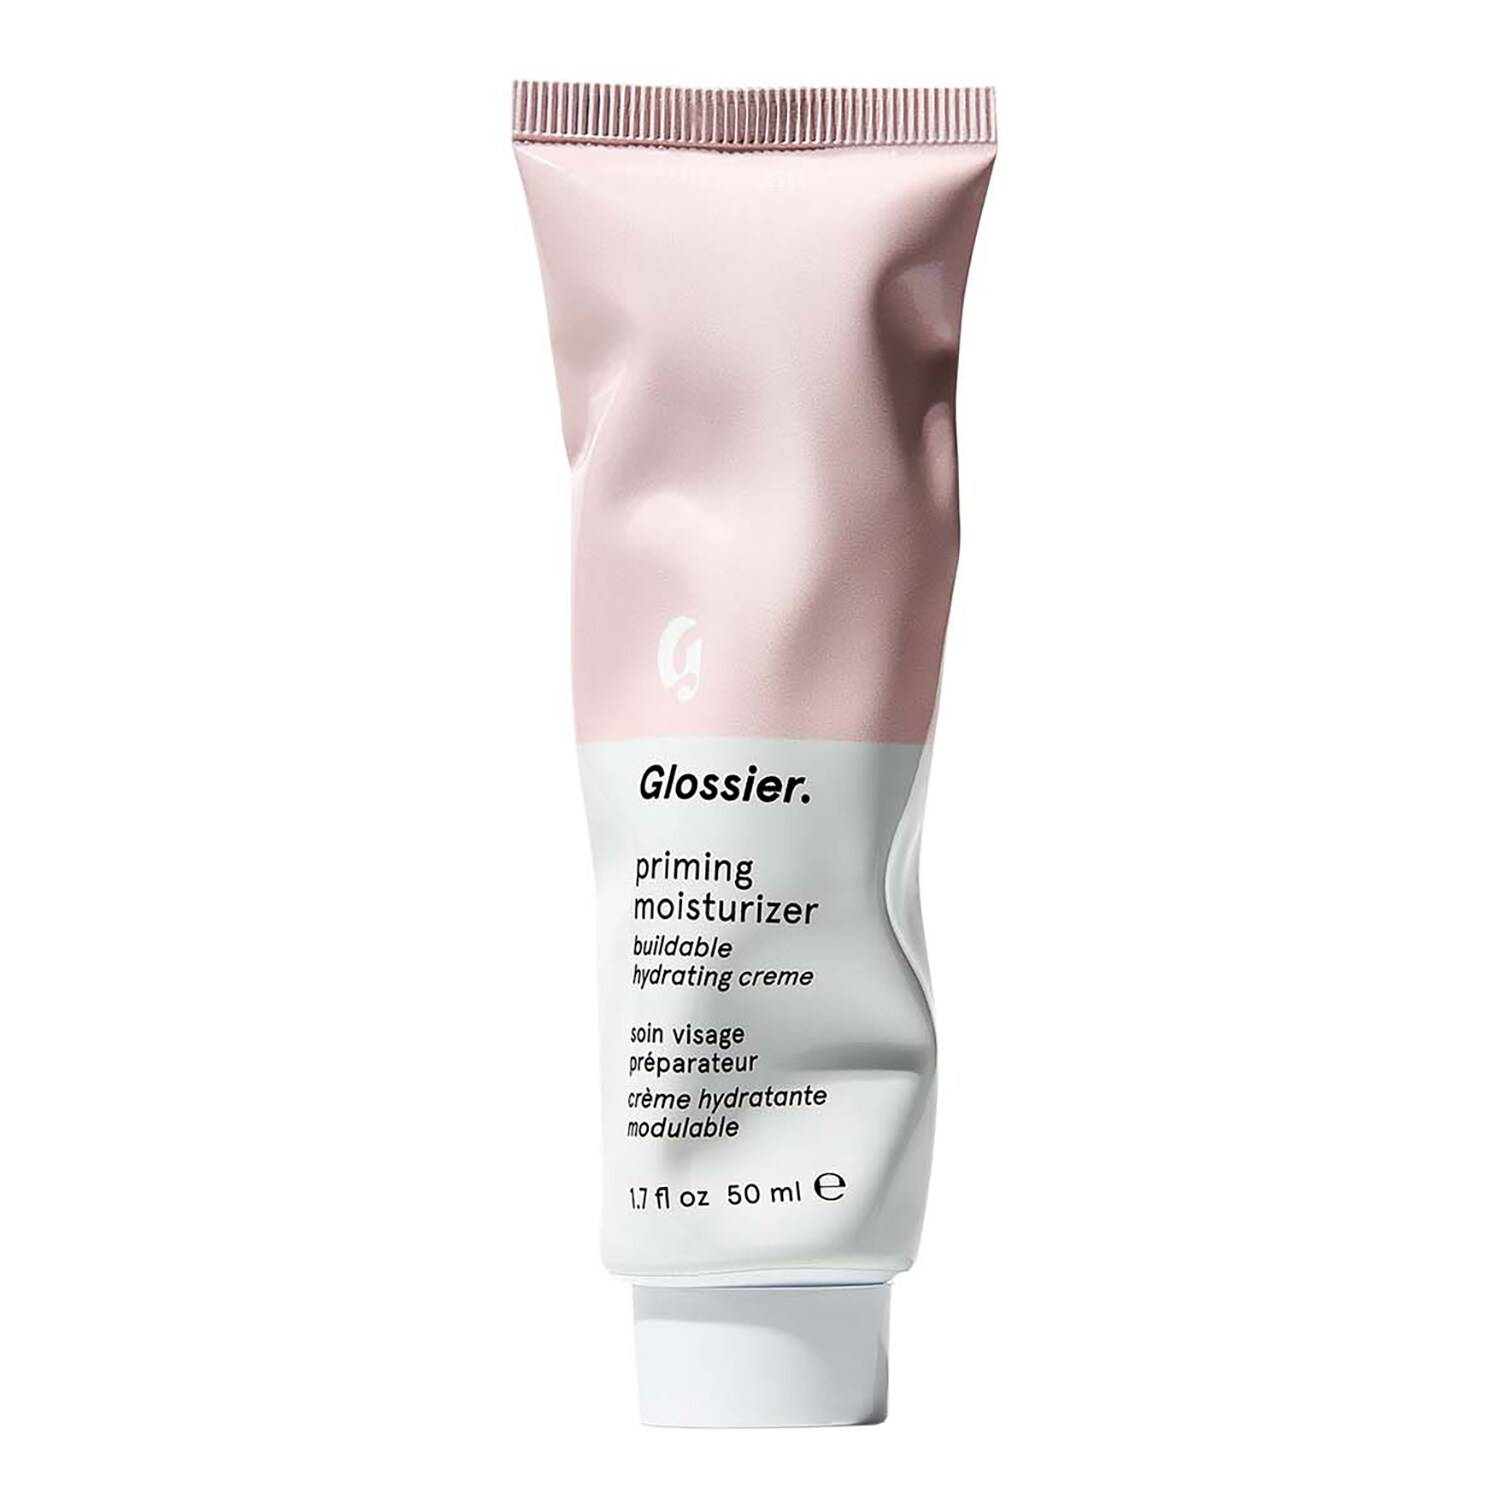 GLOSSIER Priming Moisturizer Lightweight Buildable Face Cream 50ml